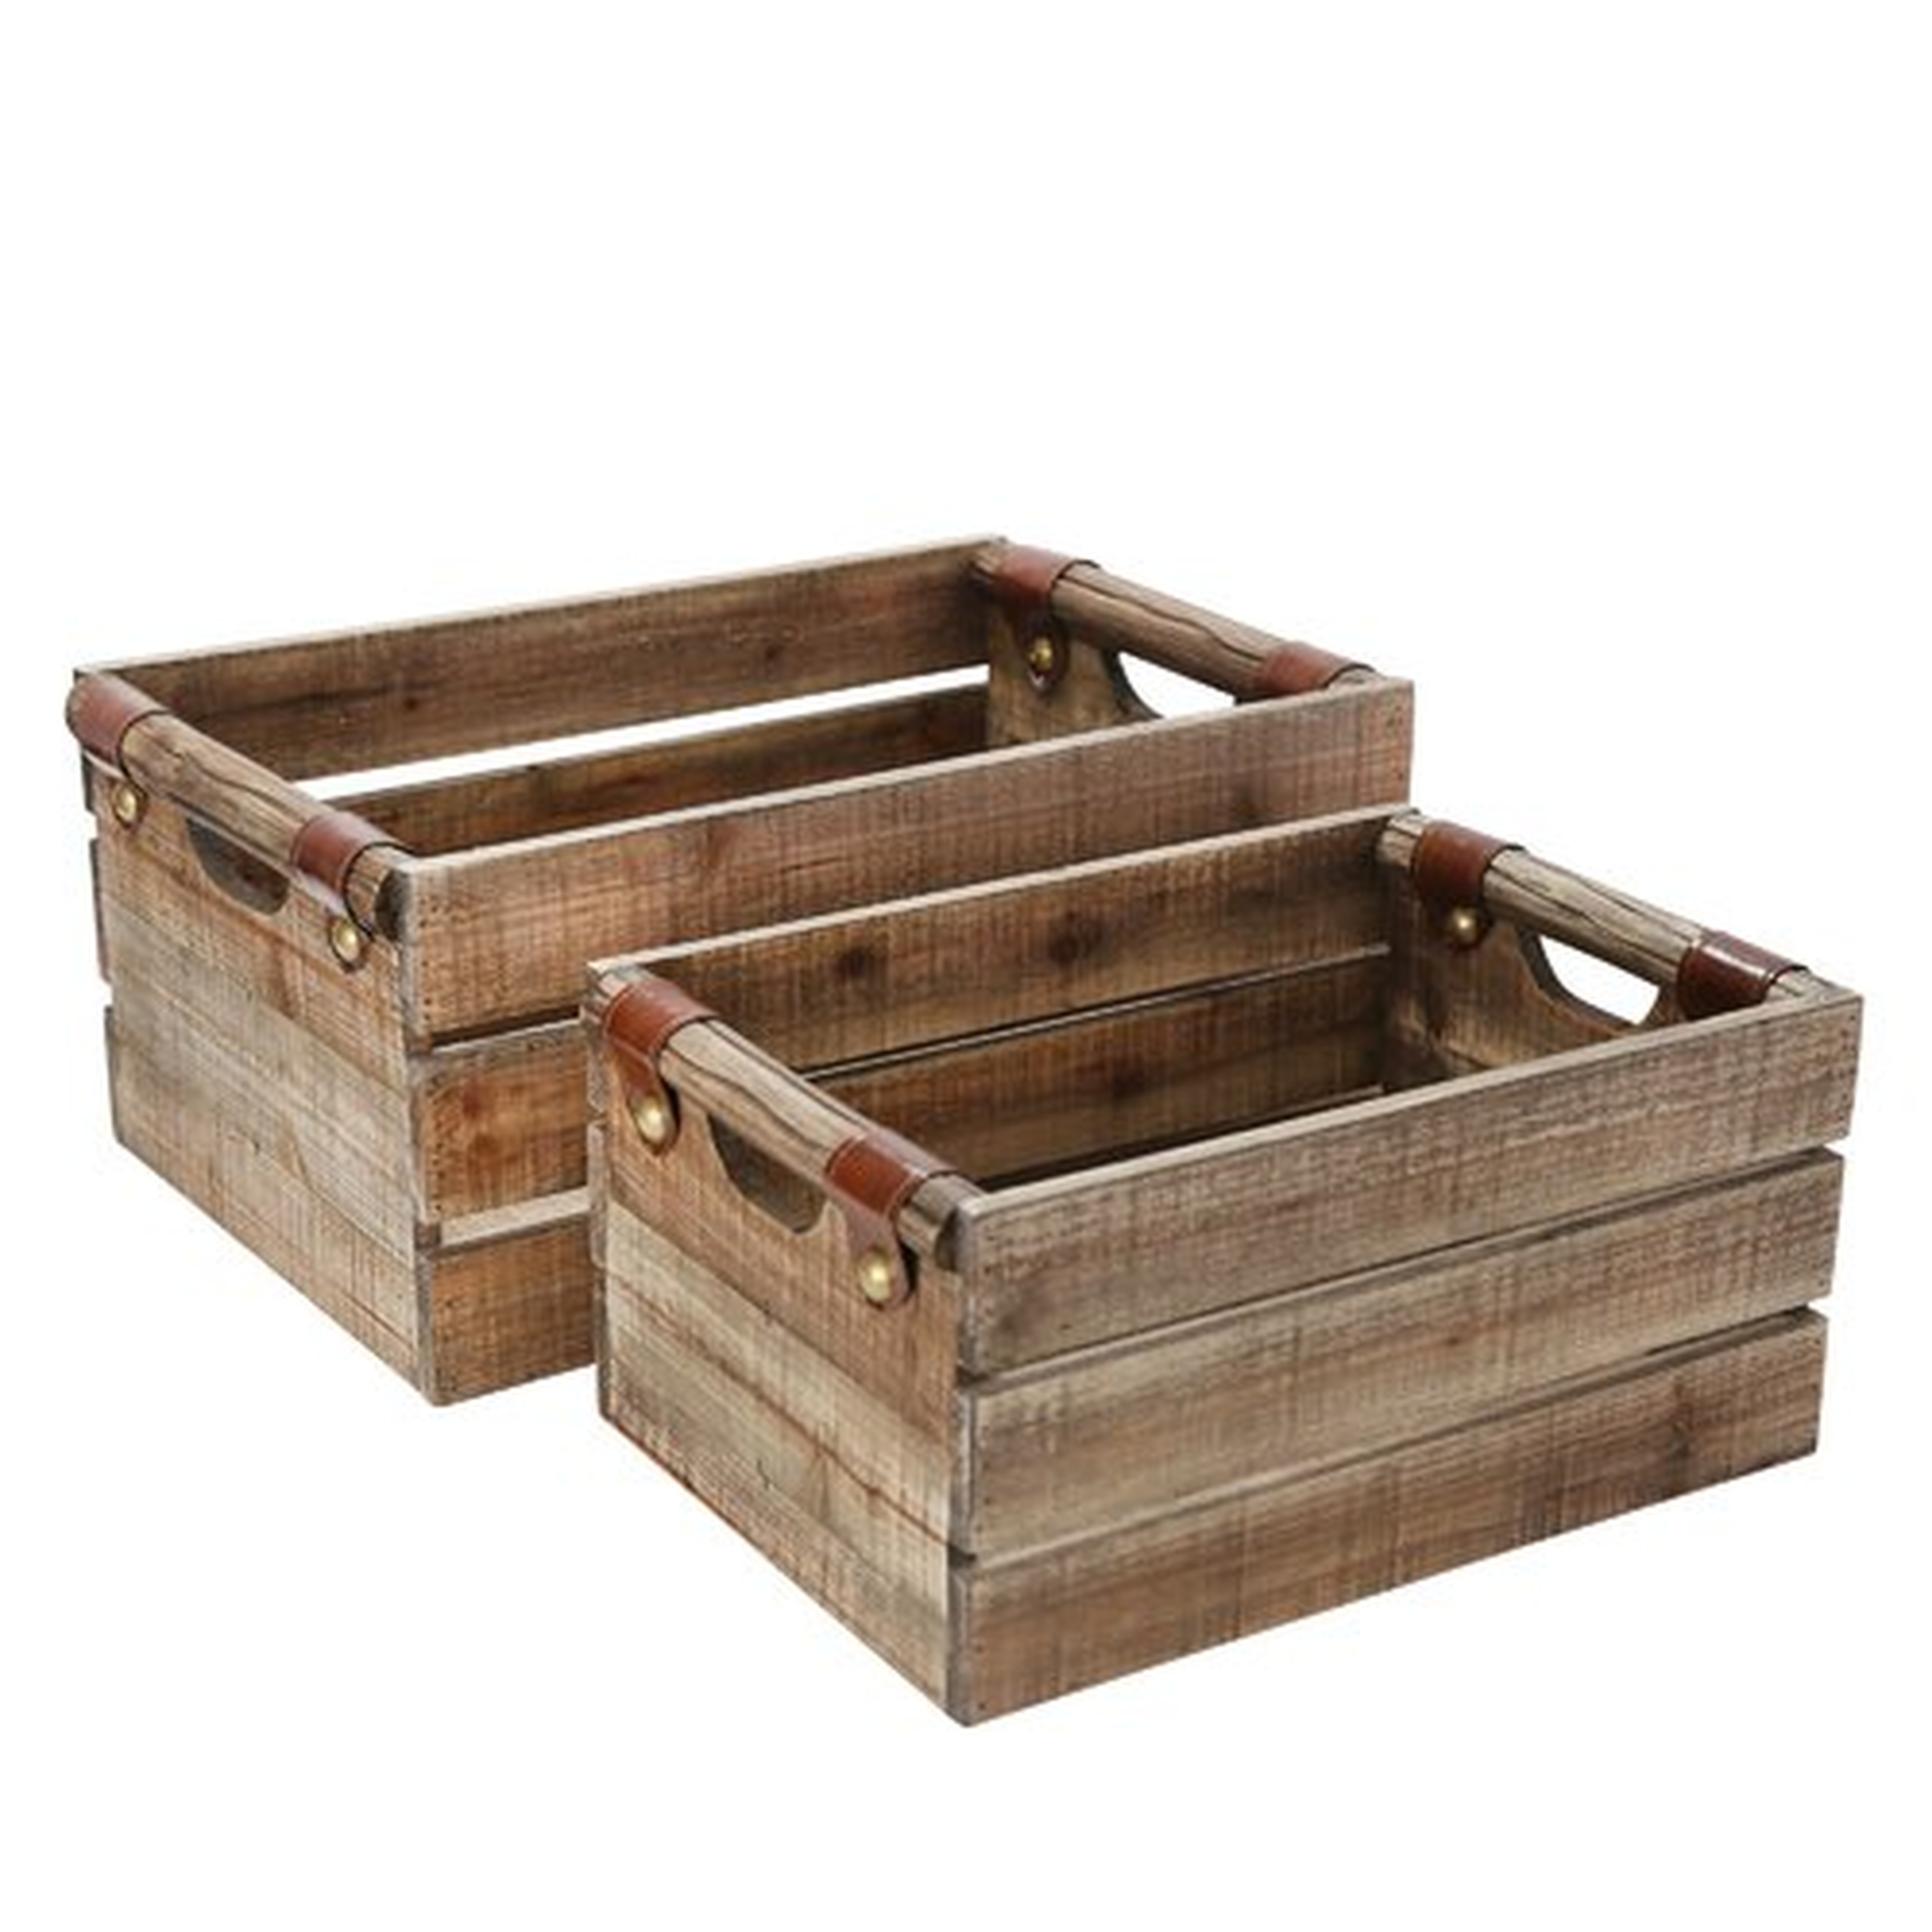 2 Piece Solid Wood Crate Set - Wayfair